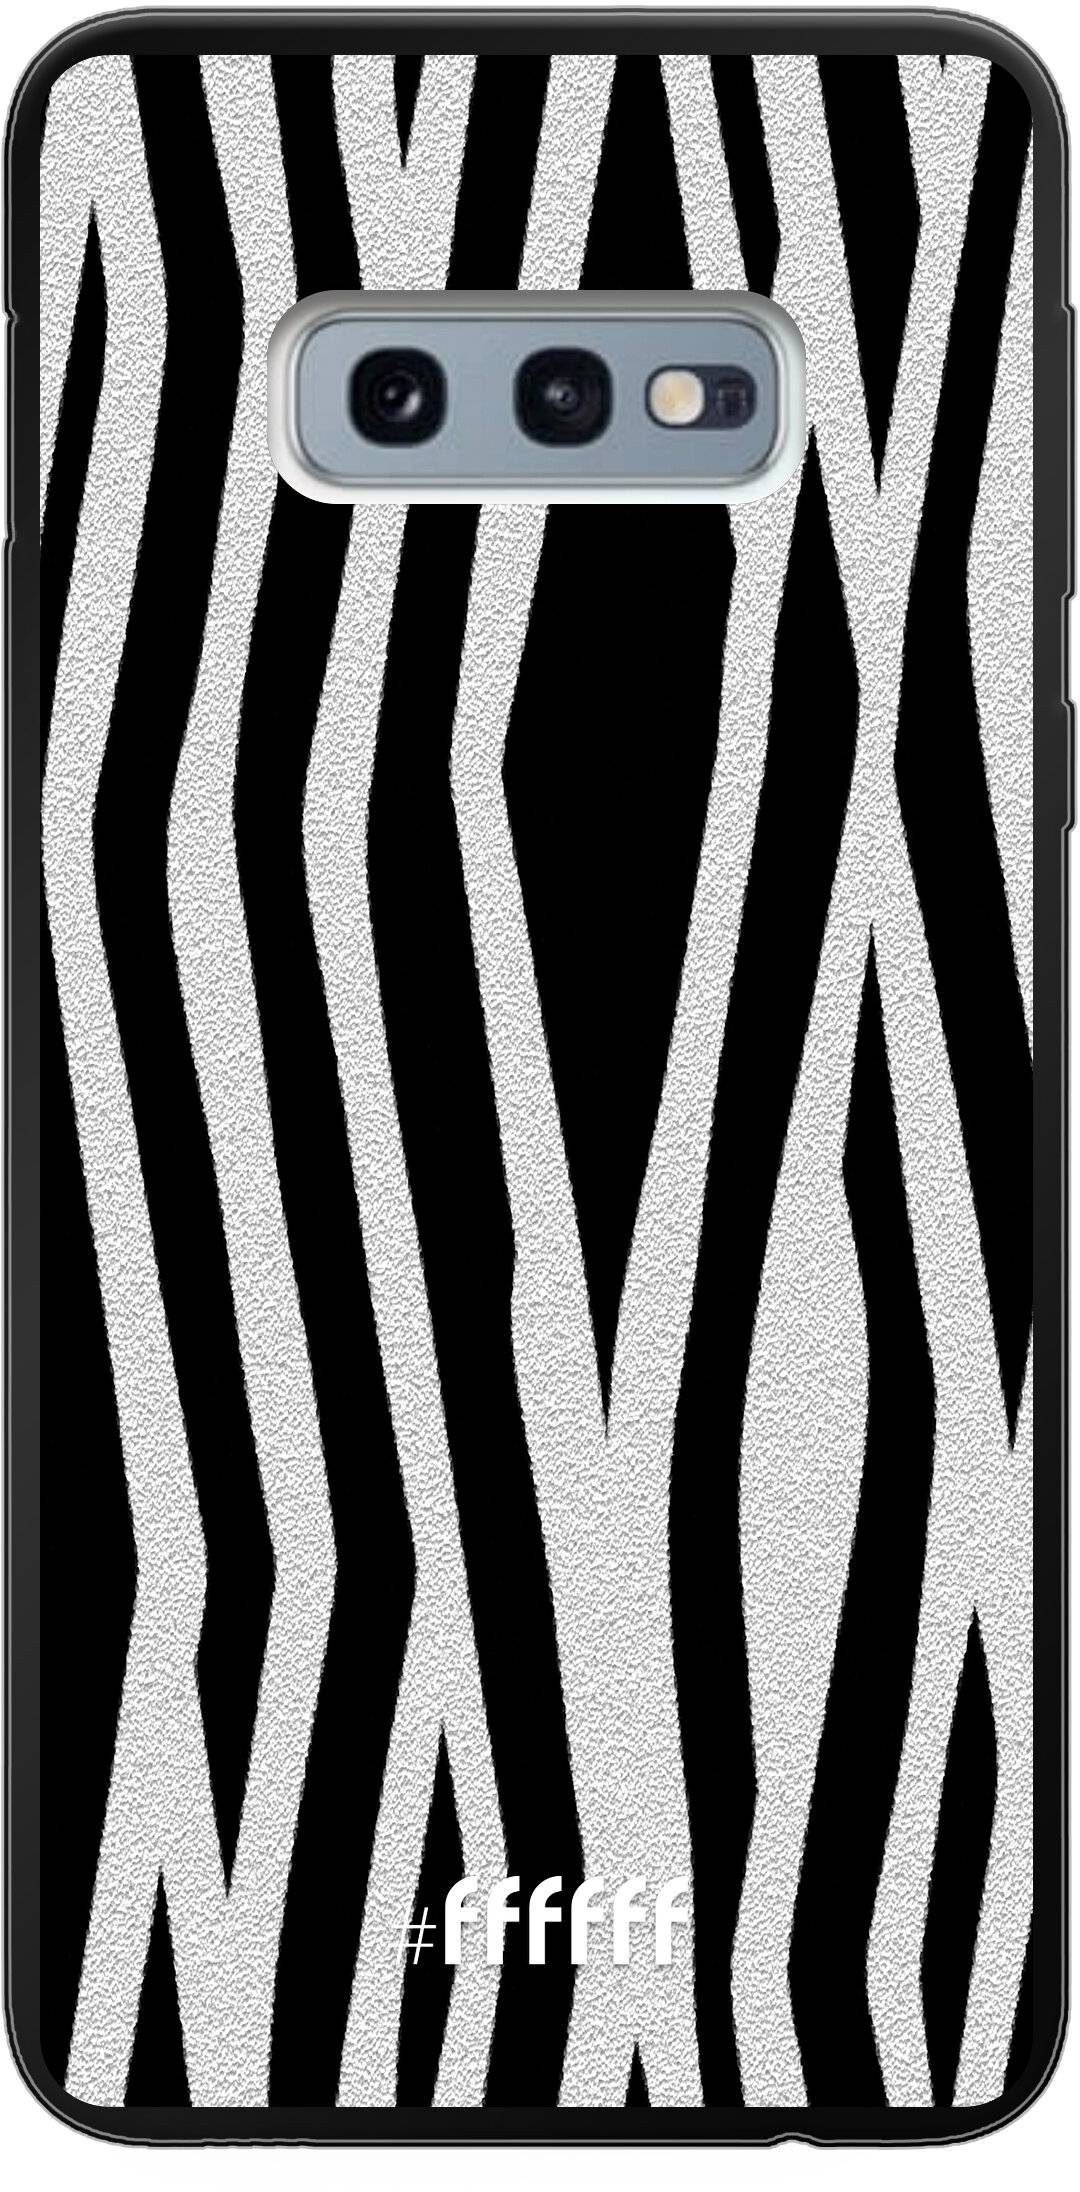 Zebra Print Galaxy S10e